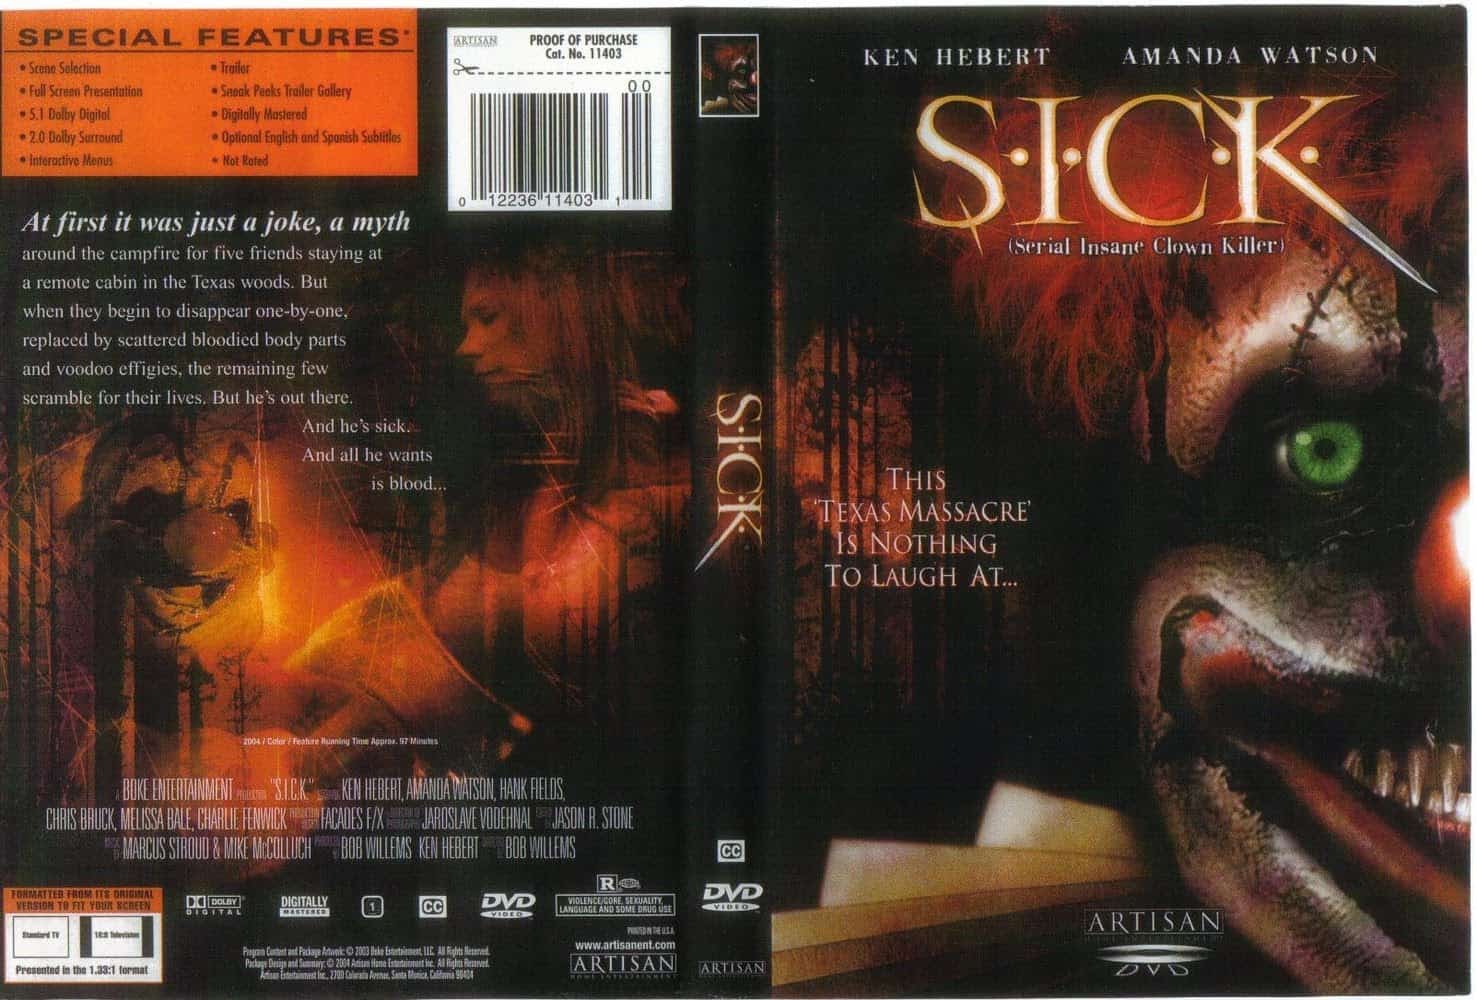 S.I.C.K. Serial Insane  Clown Killer (2003)